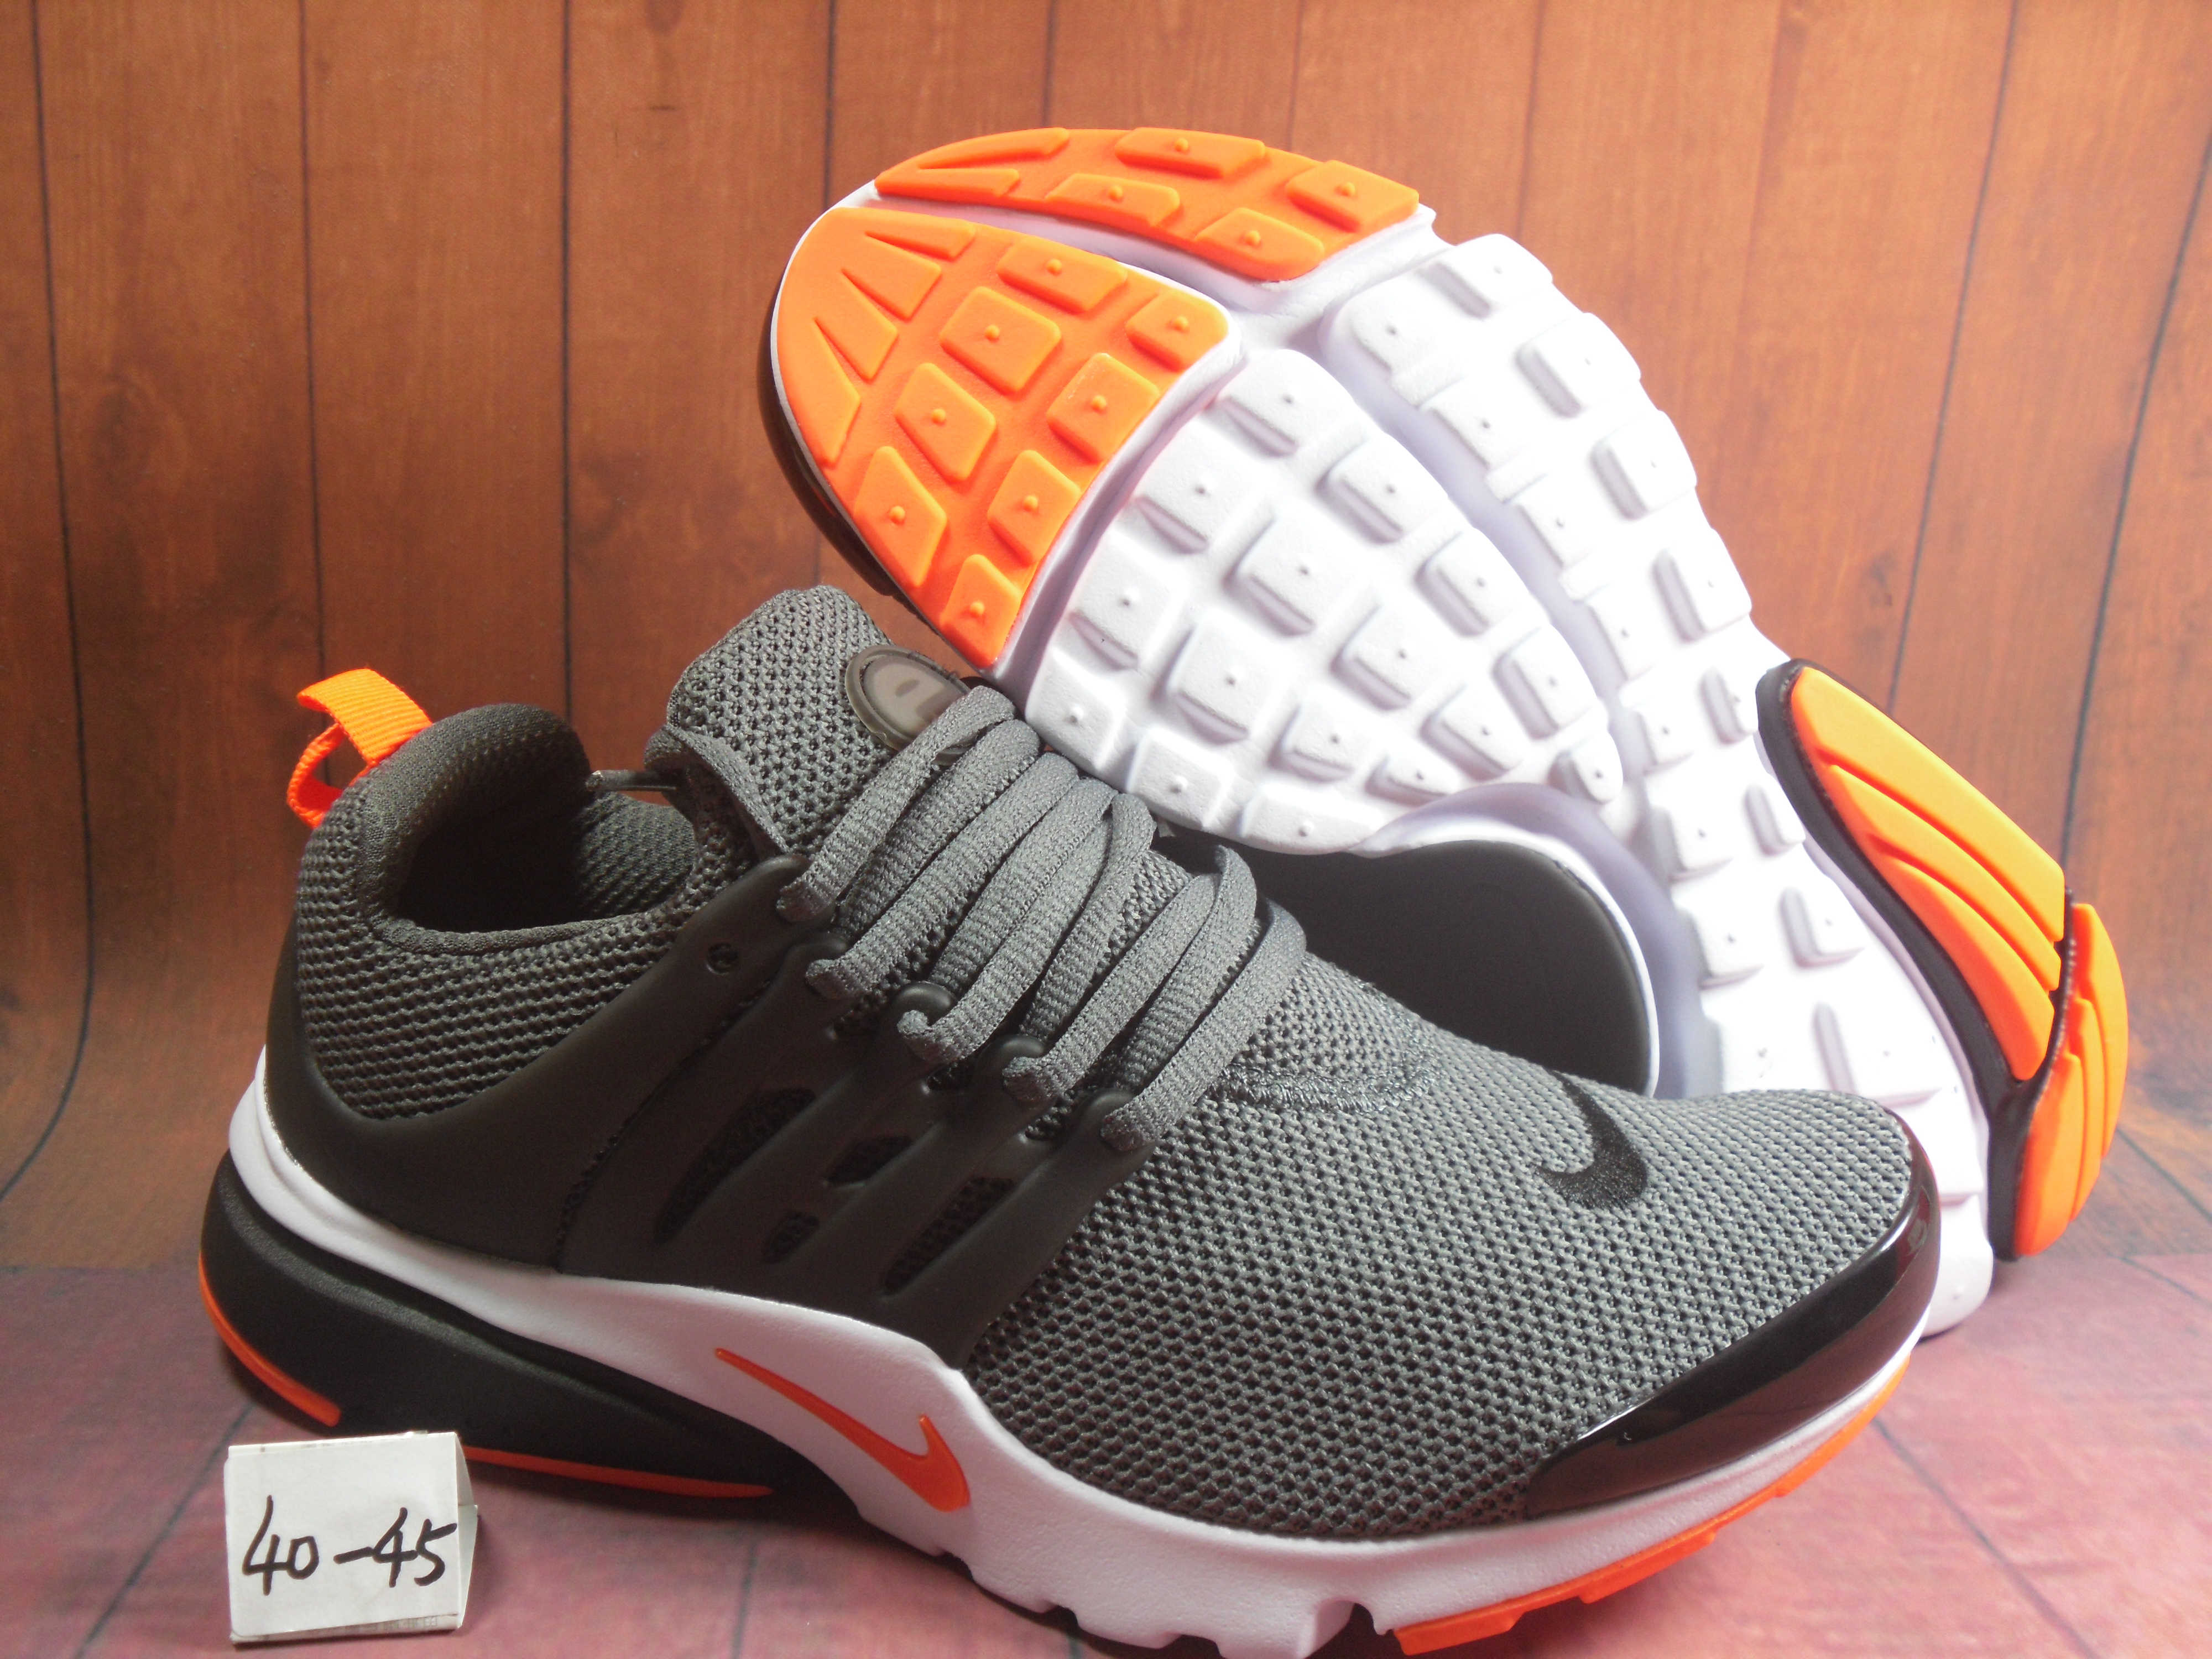 New Nike Air Presto Grey Black Orange Shoes